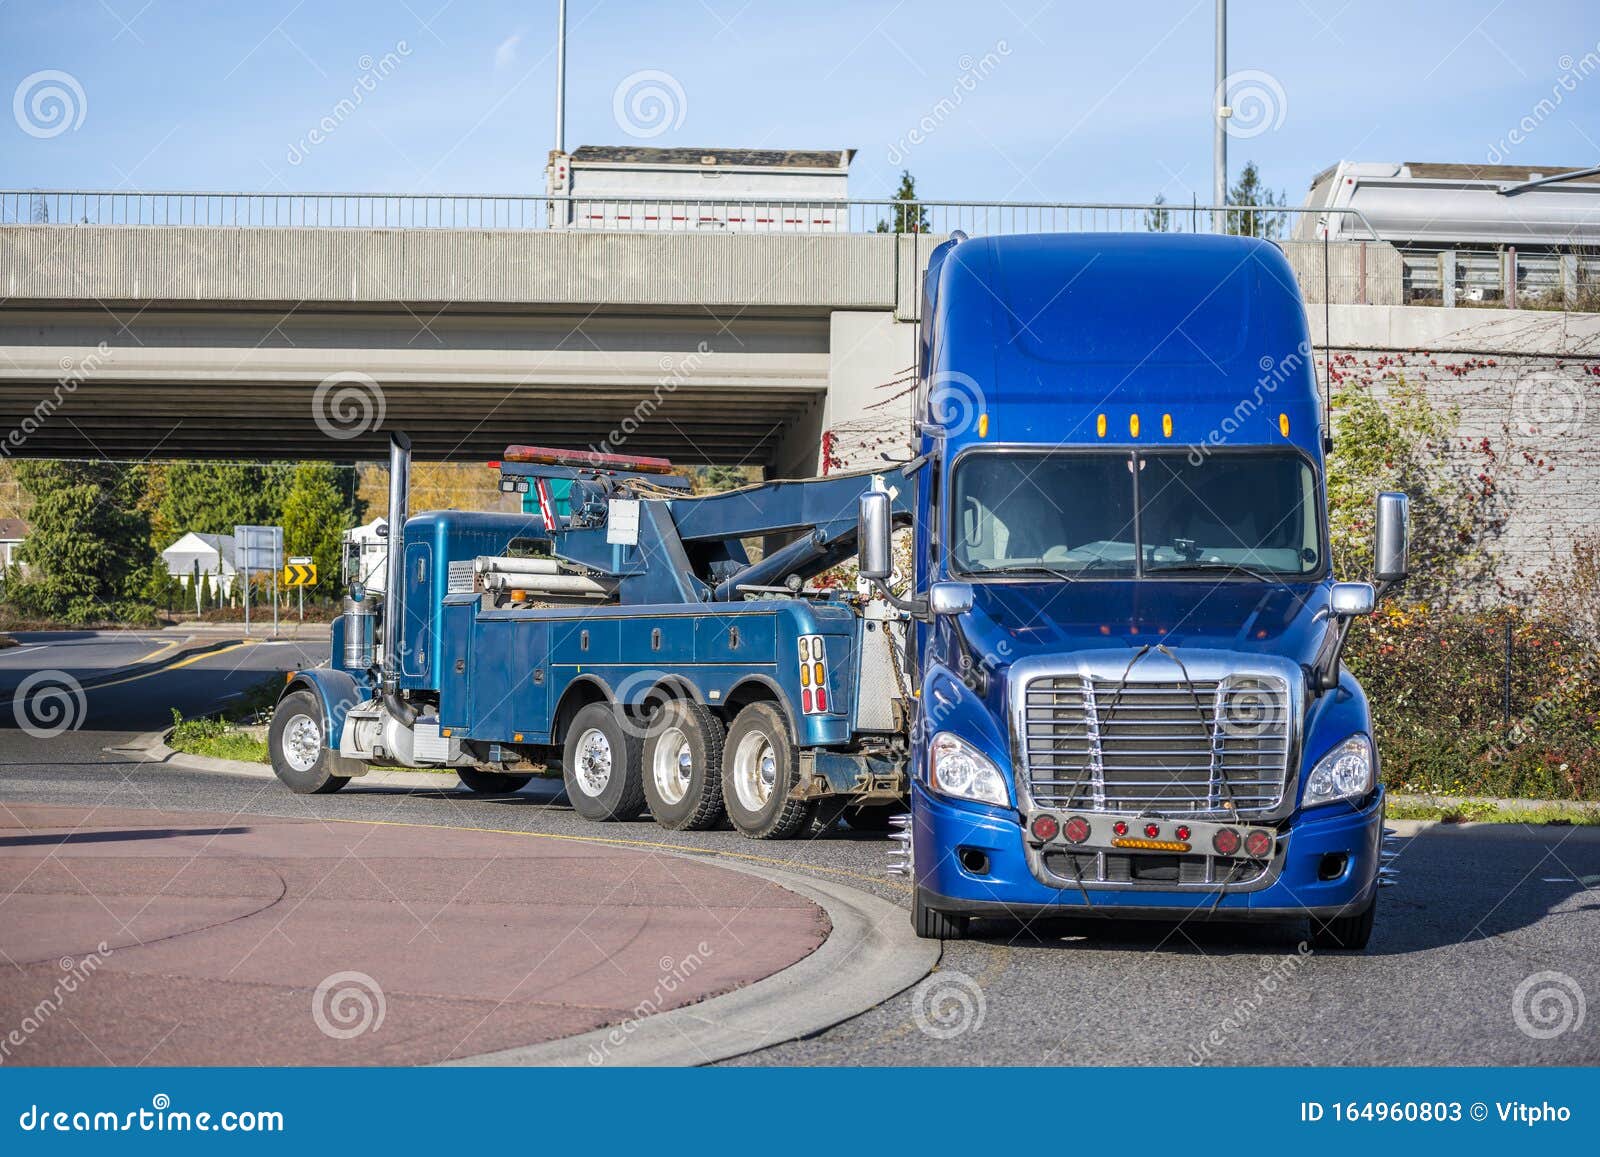 big rig tow truck towing broken blue big rig semi truck tractor going under the bridge